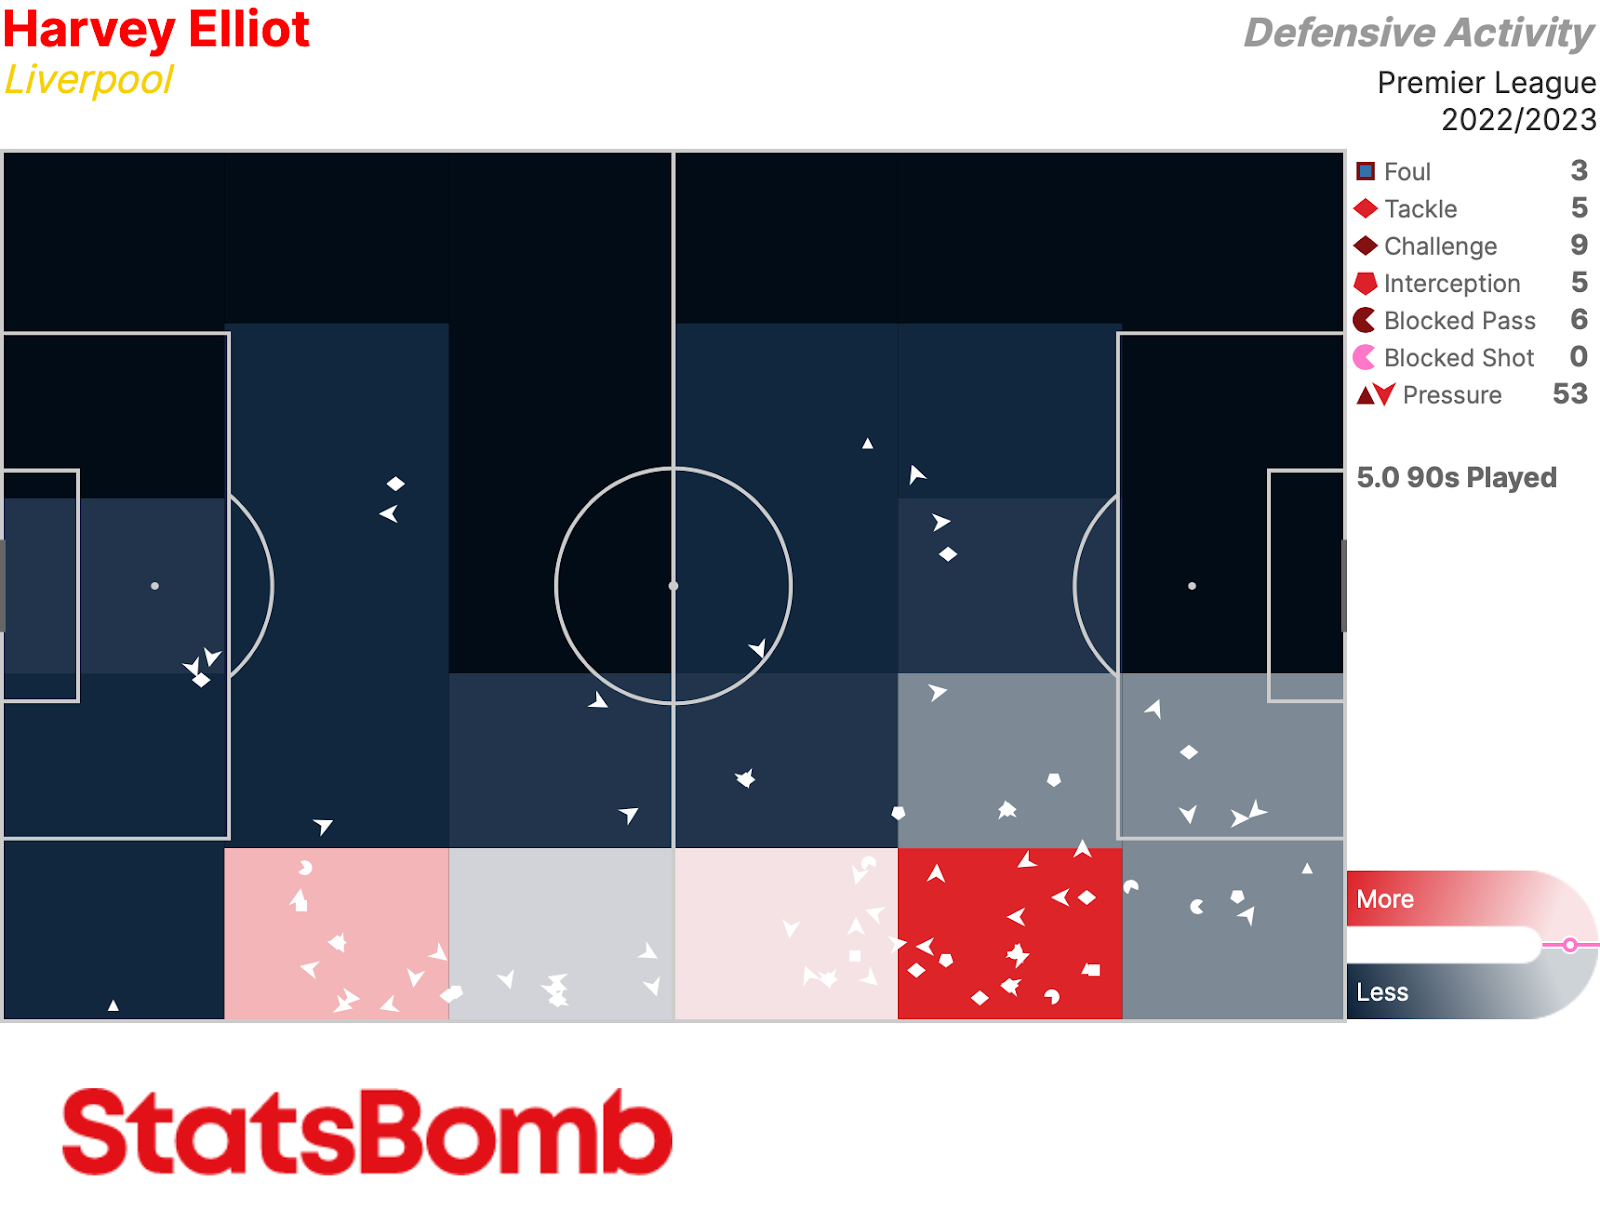 Harvey Elliott's defensive activity heatmap courtesy of StatsBomb